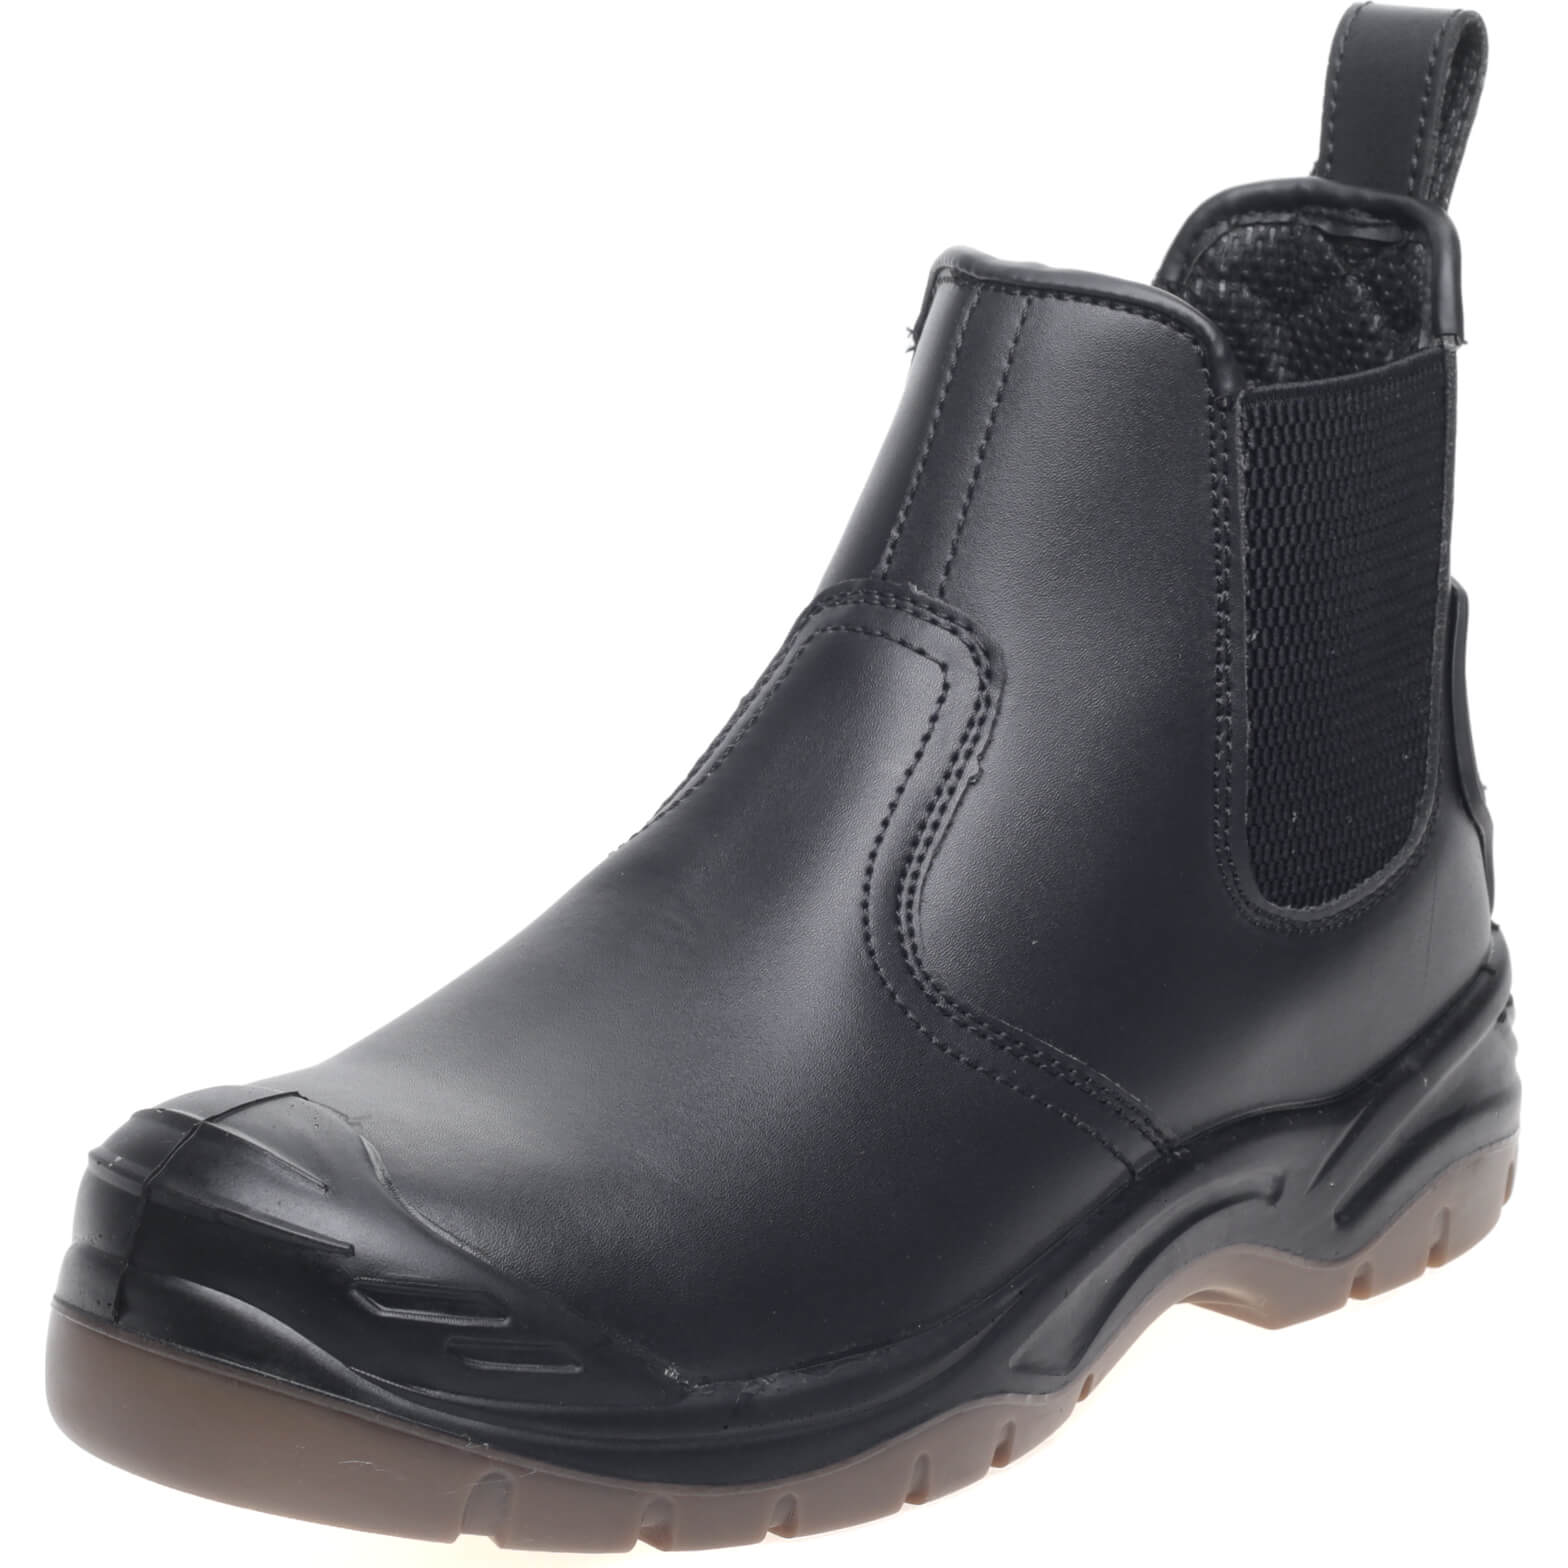 Image of Apache AP71 Safety Dealer Boots Black Size 8